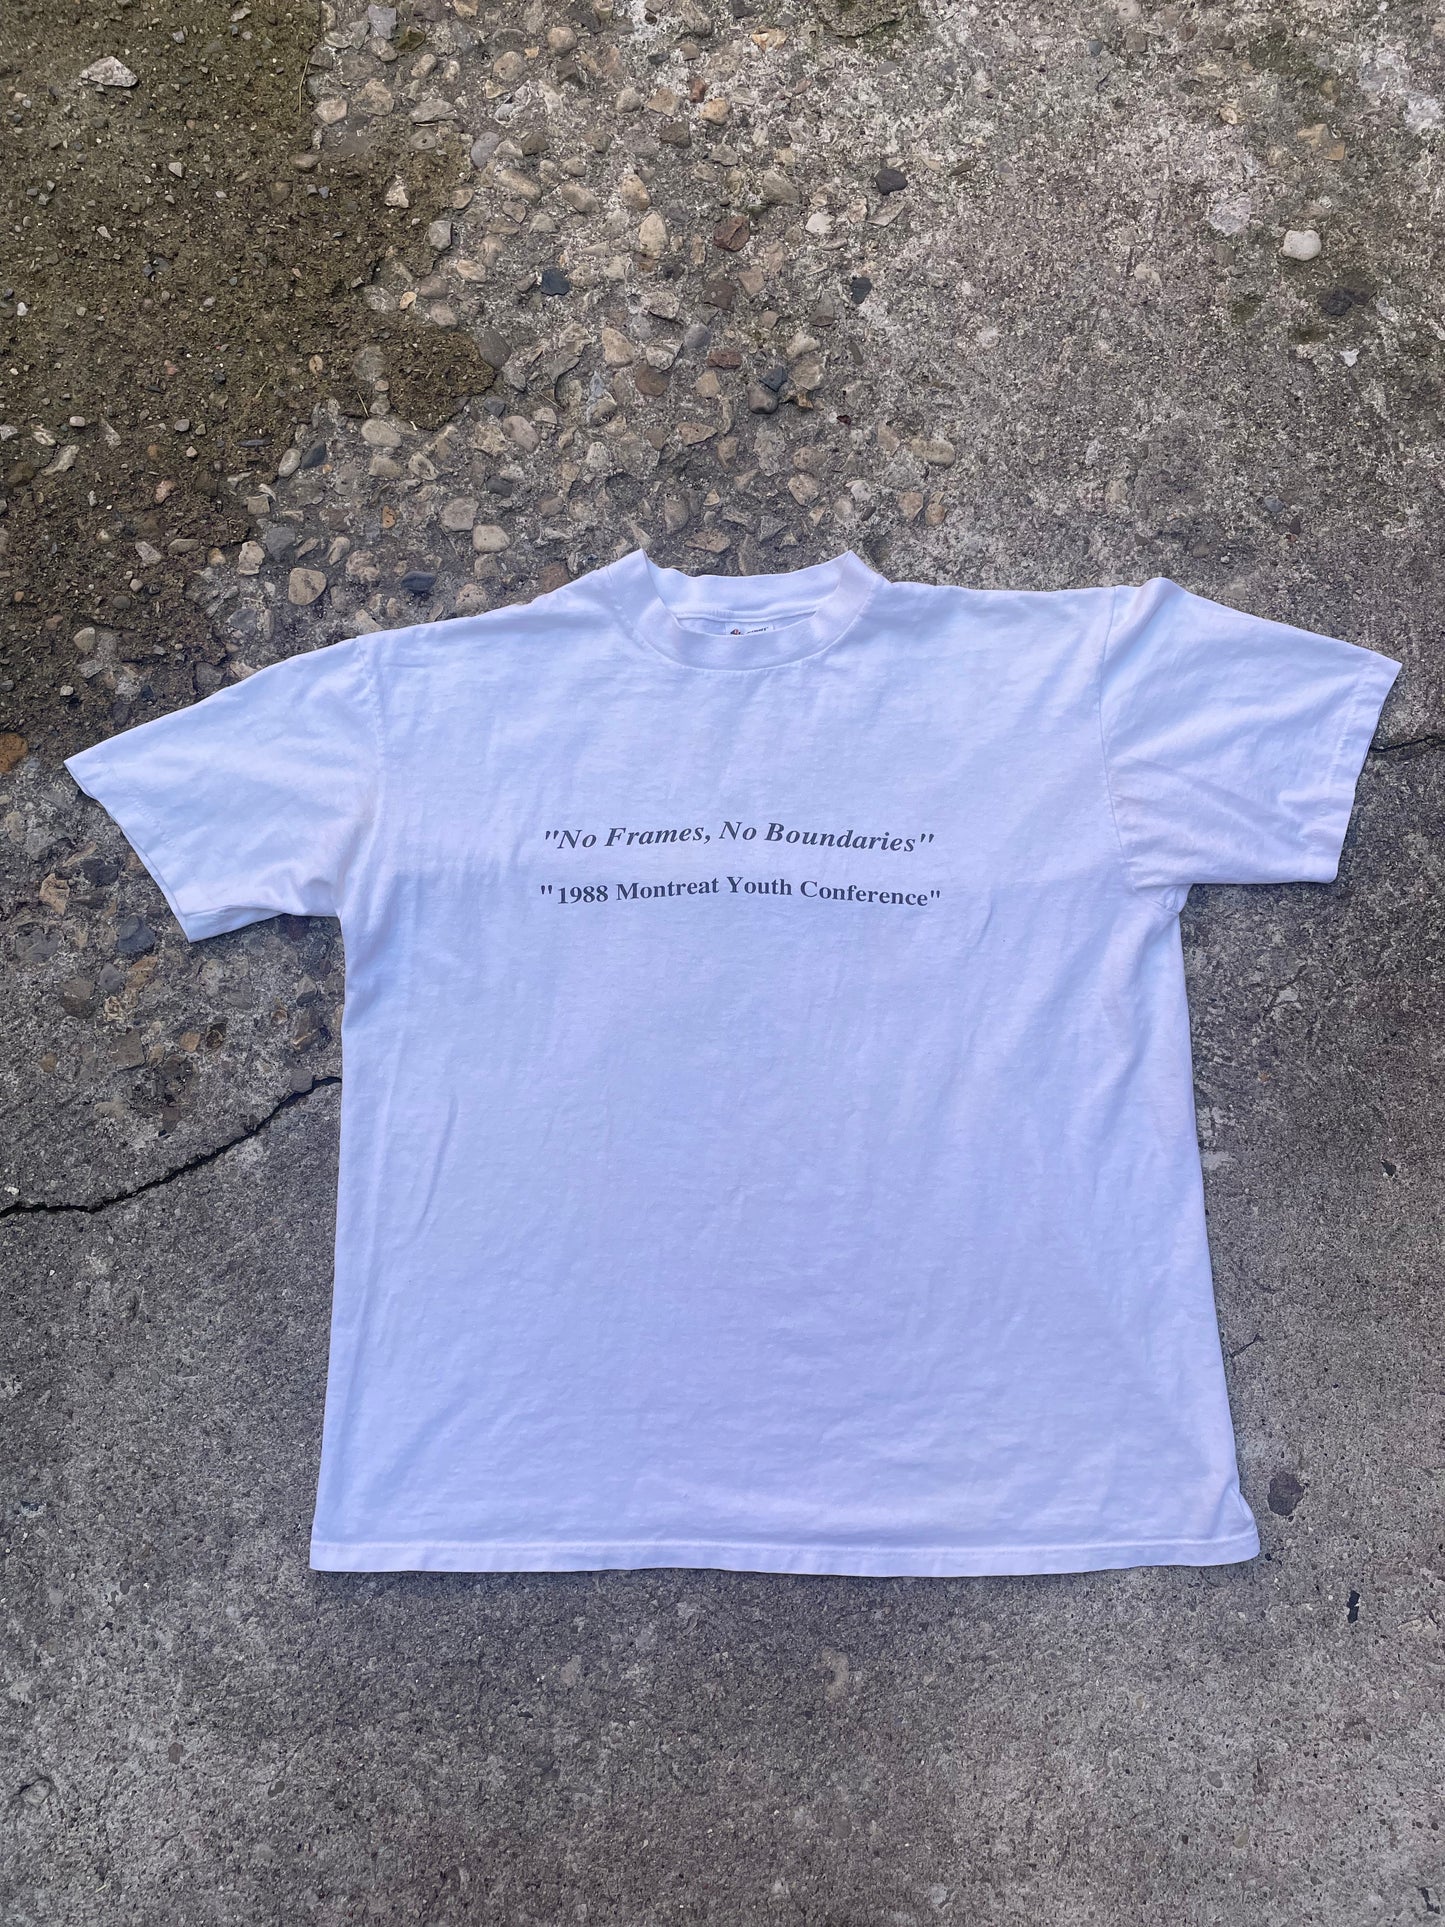 1988 Montreat Youth Conference Mona Lisa Art T-Shirt - XL